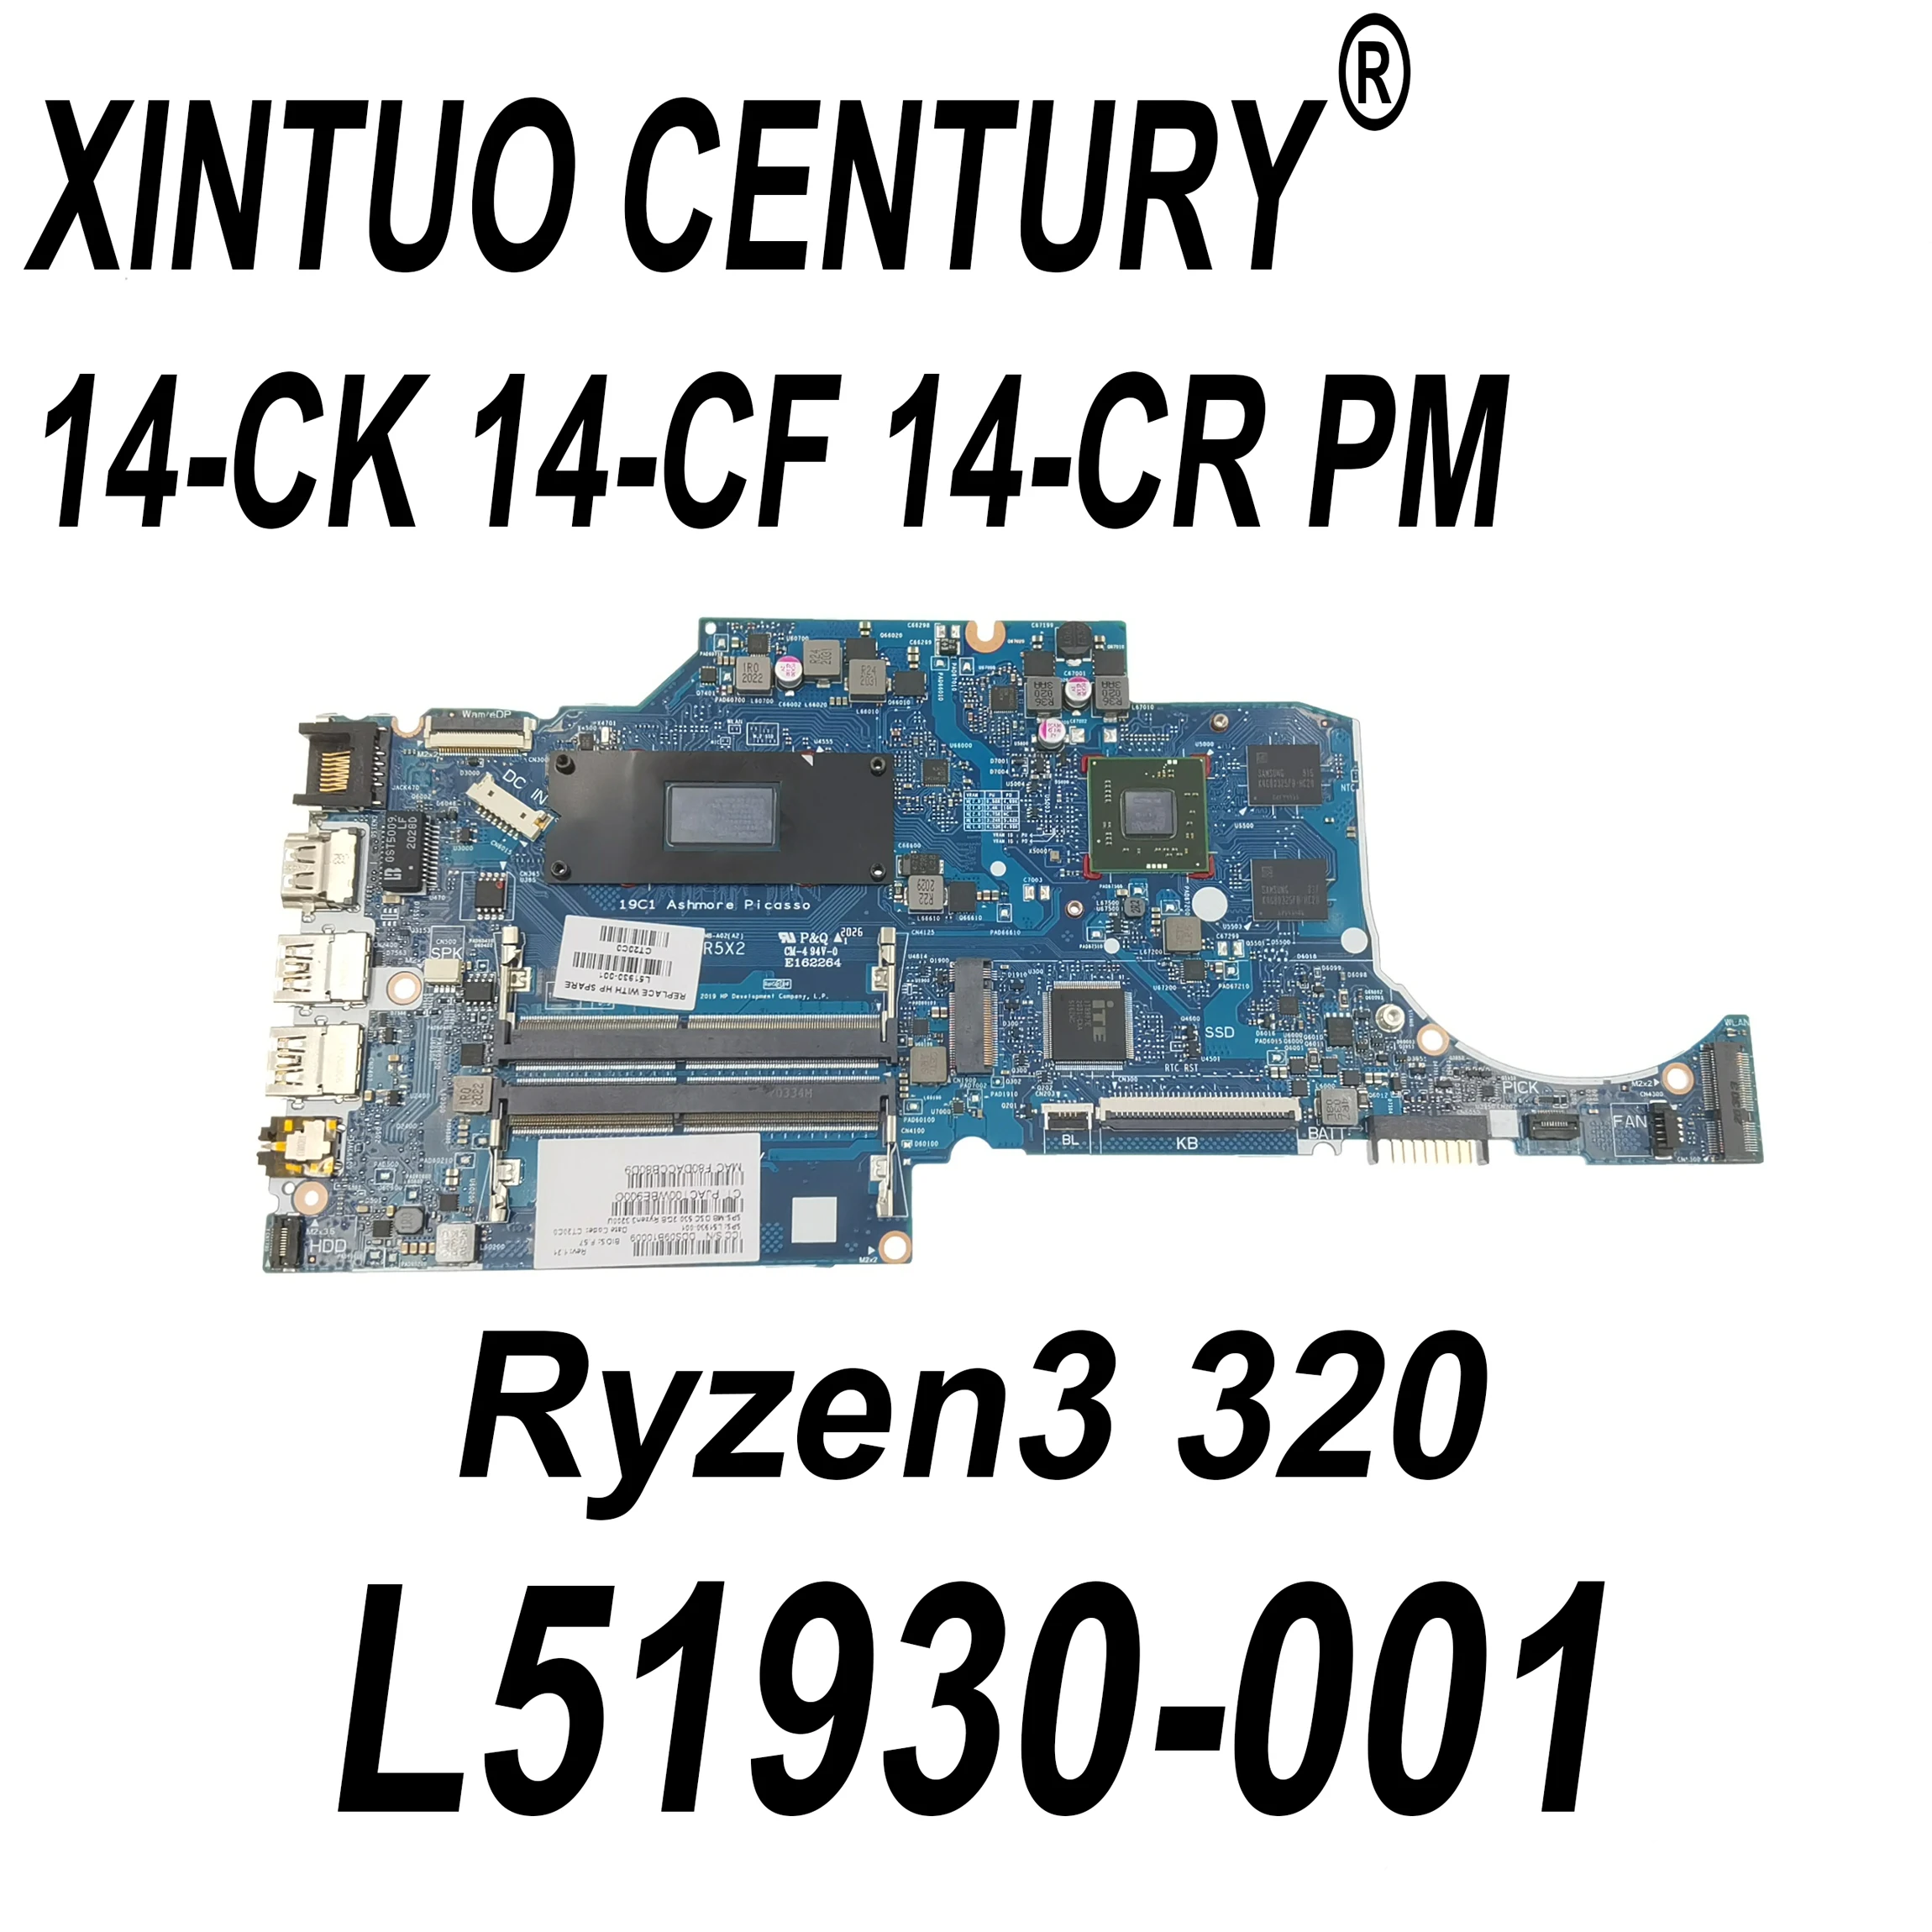 

L51930-001 L54189-001 для HP 114-CK 14-CF 14-CR Материнская плата ноутбука 6050A3068501 AMD Ryzen3 320 216-0889018 100%